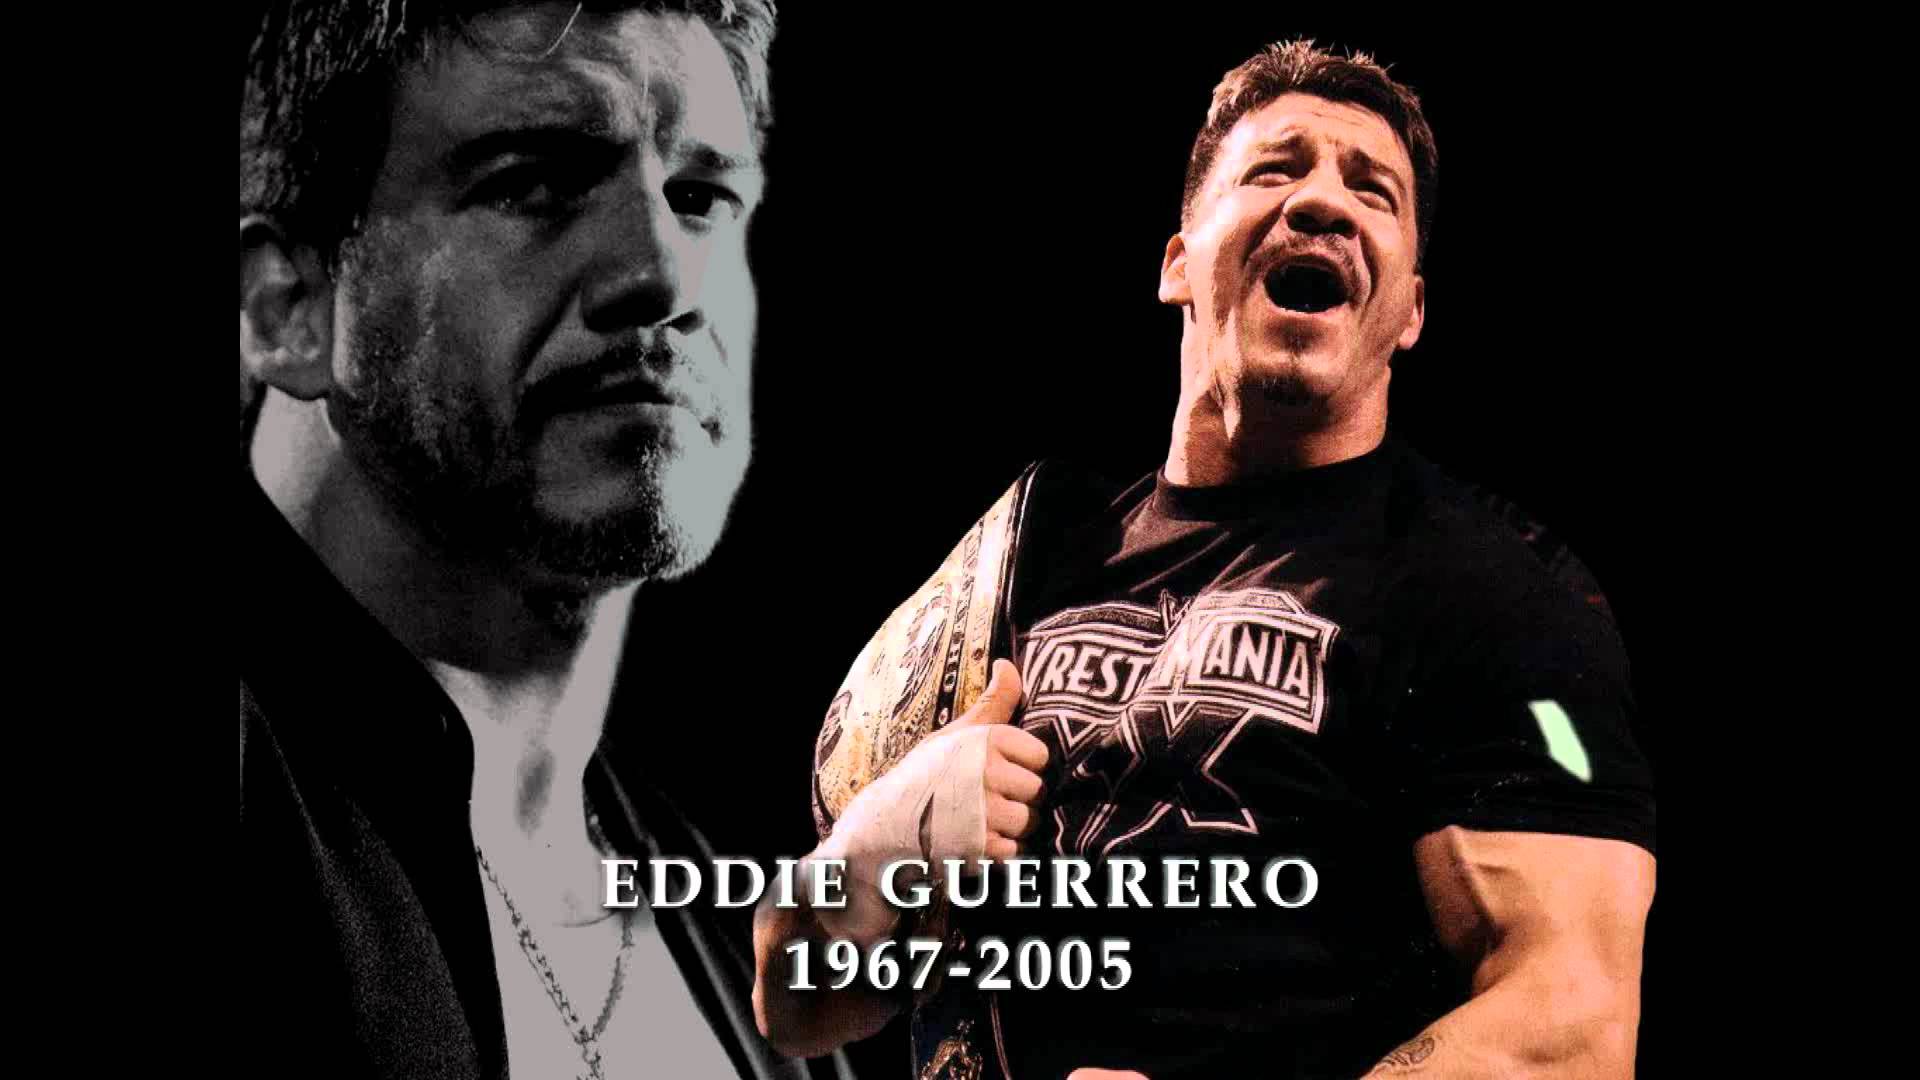 Eddie Guerrero 2005 Theme Song 'Gangsta Lane'